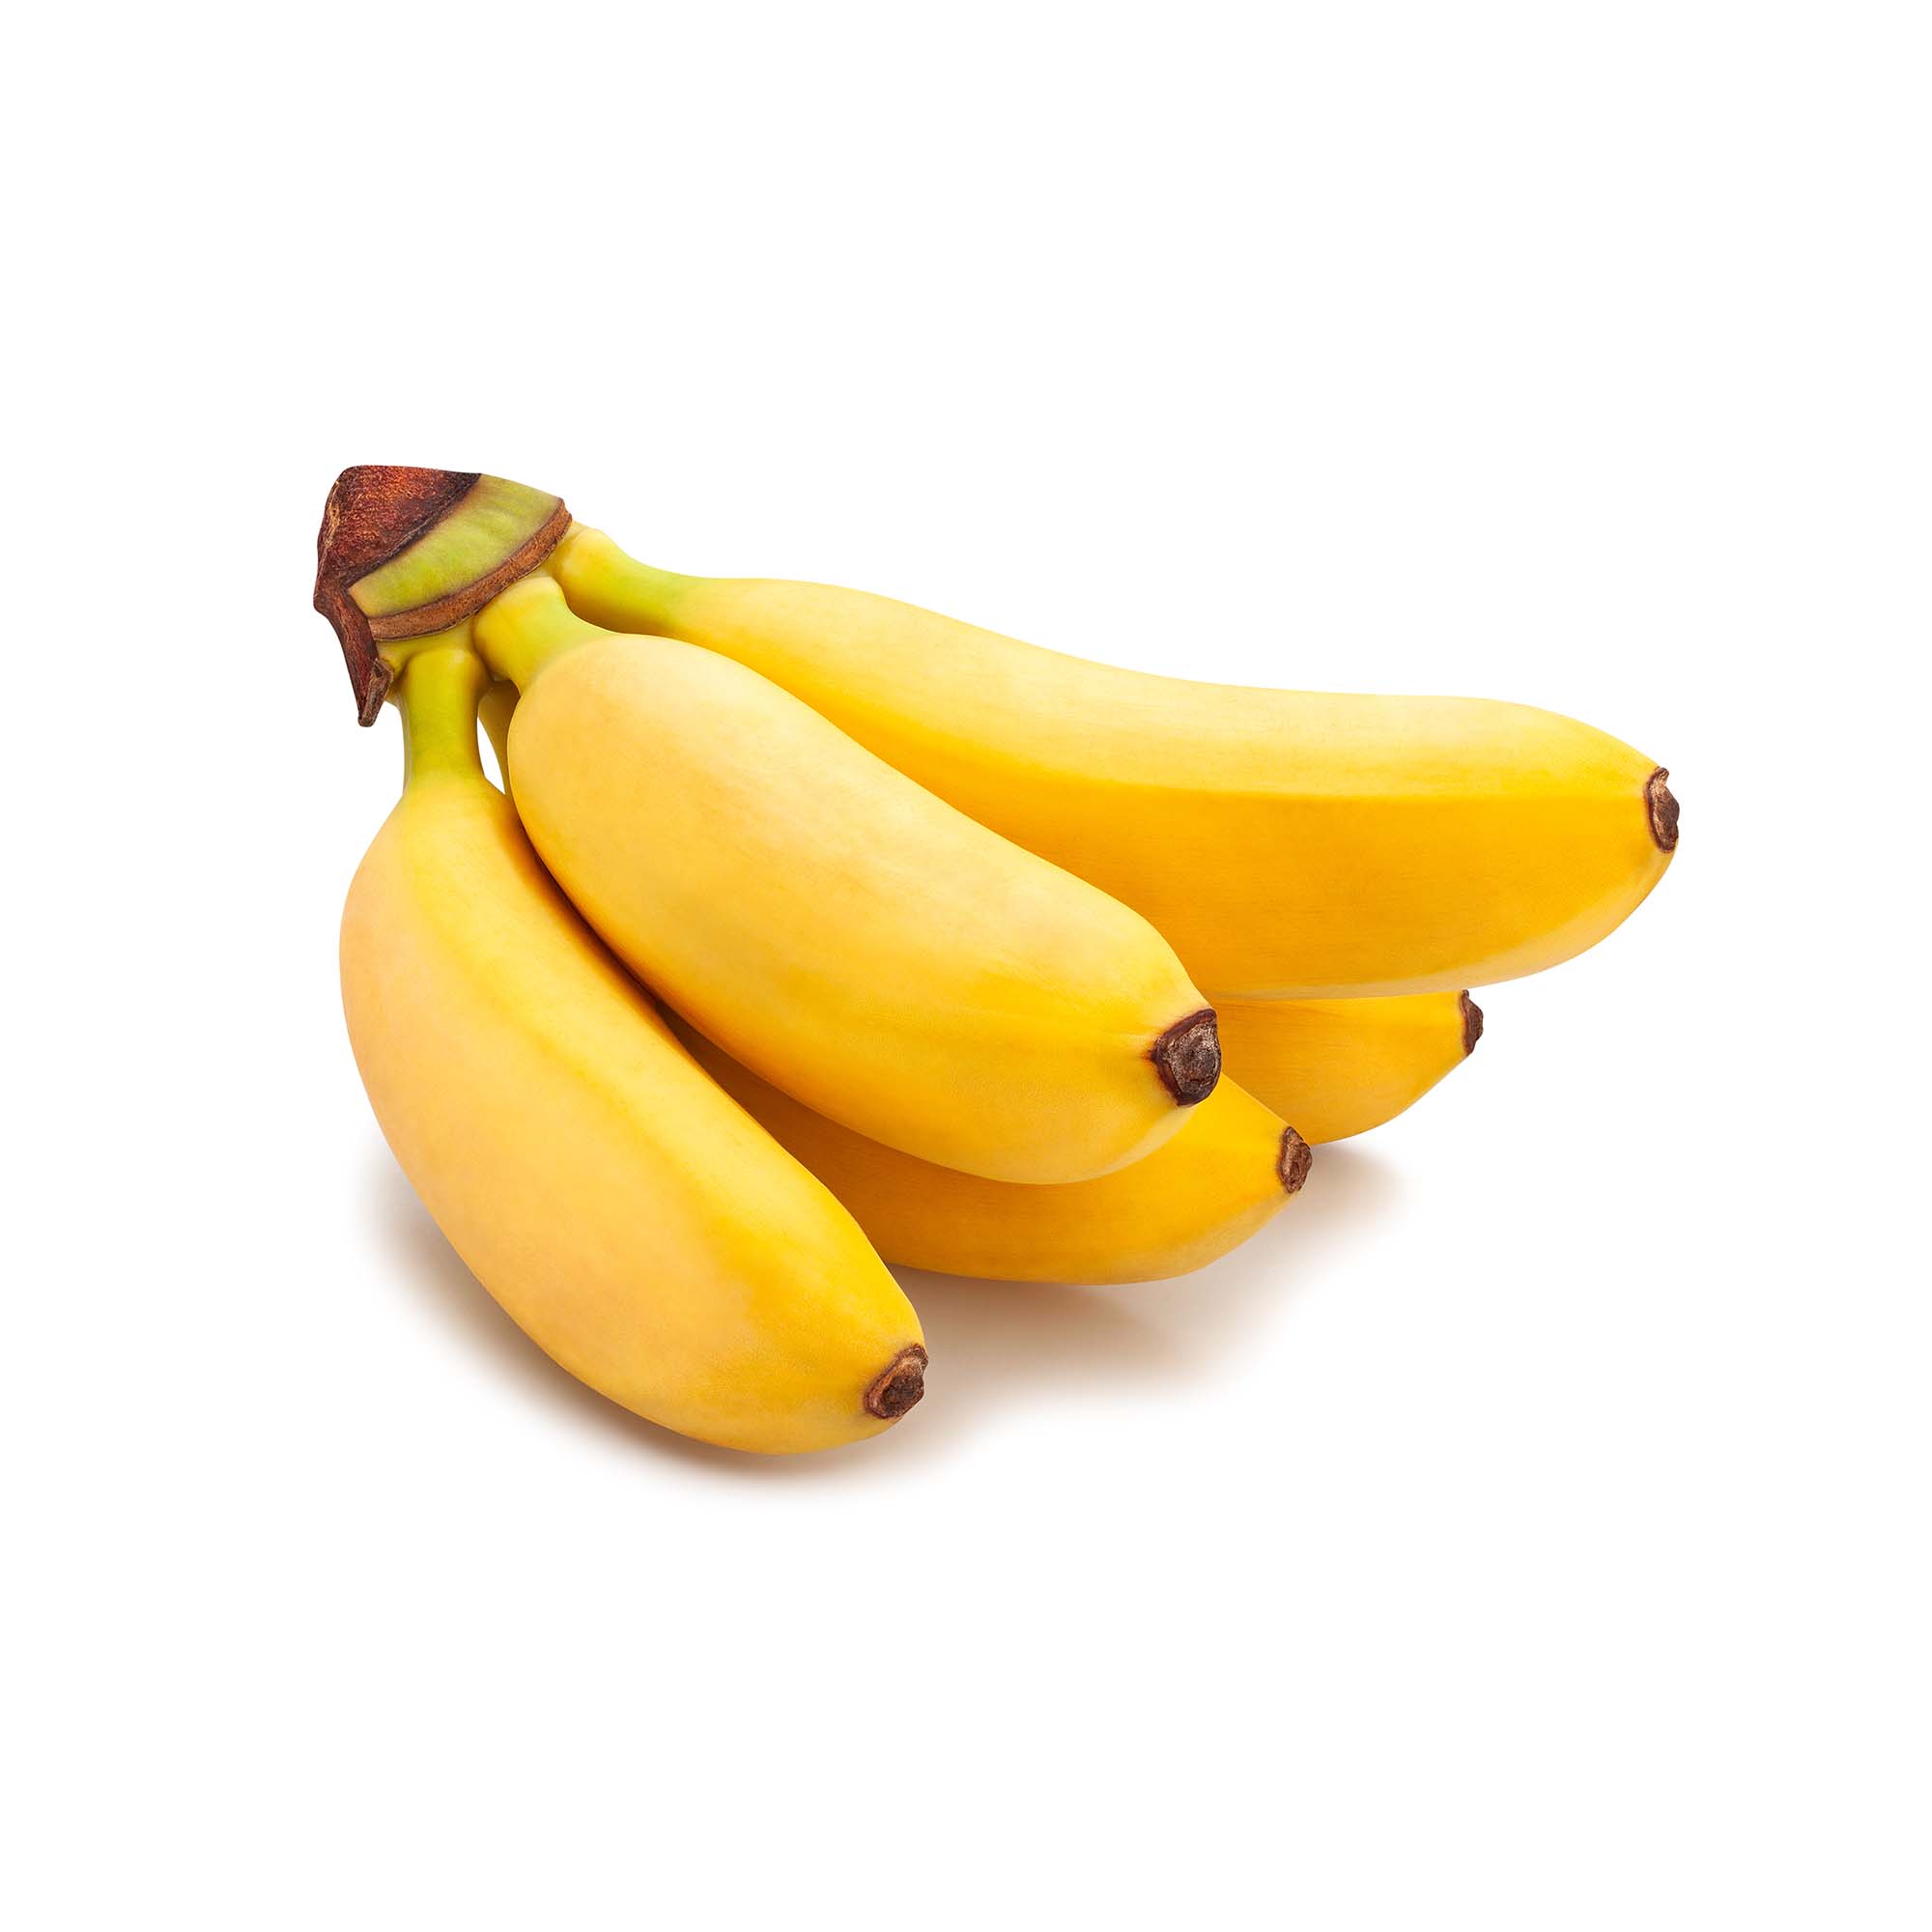 Banana - Apple / Manzano | Exotic Fruits - Rare & Tropical Exotic Fruit Shop UK